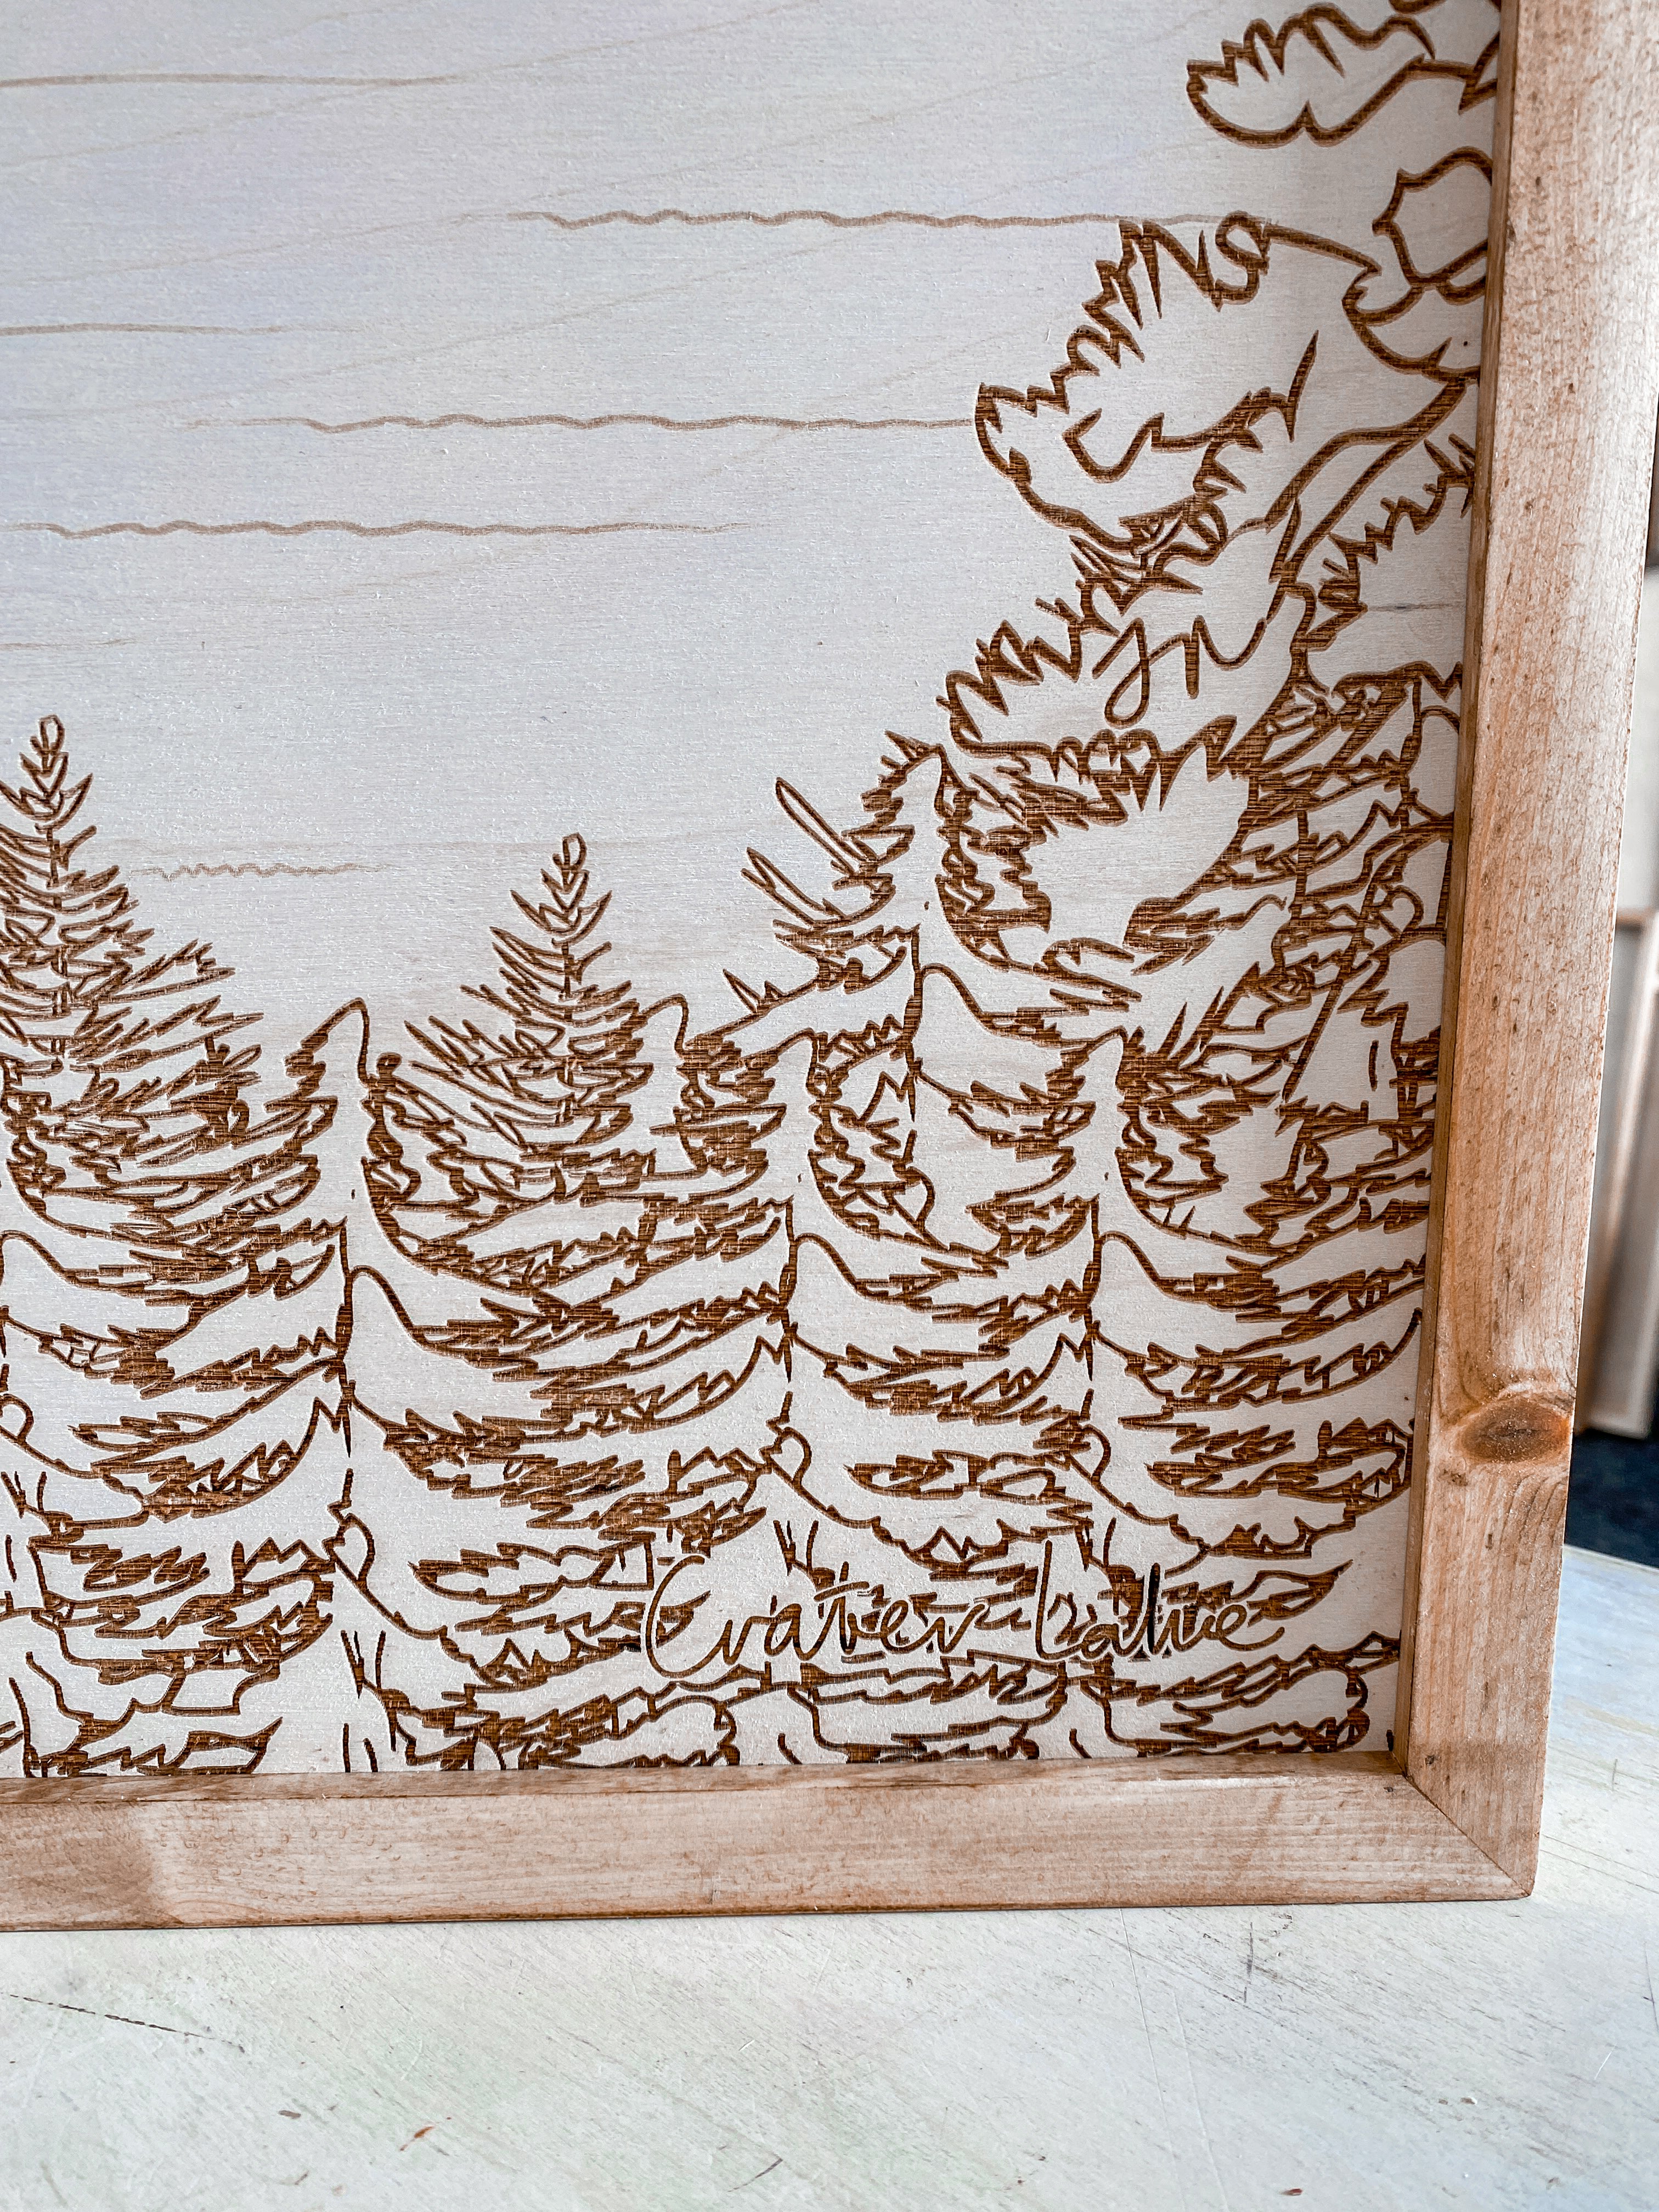 Hand Sketched Crater Lake Wood Artwork